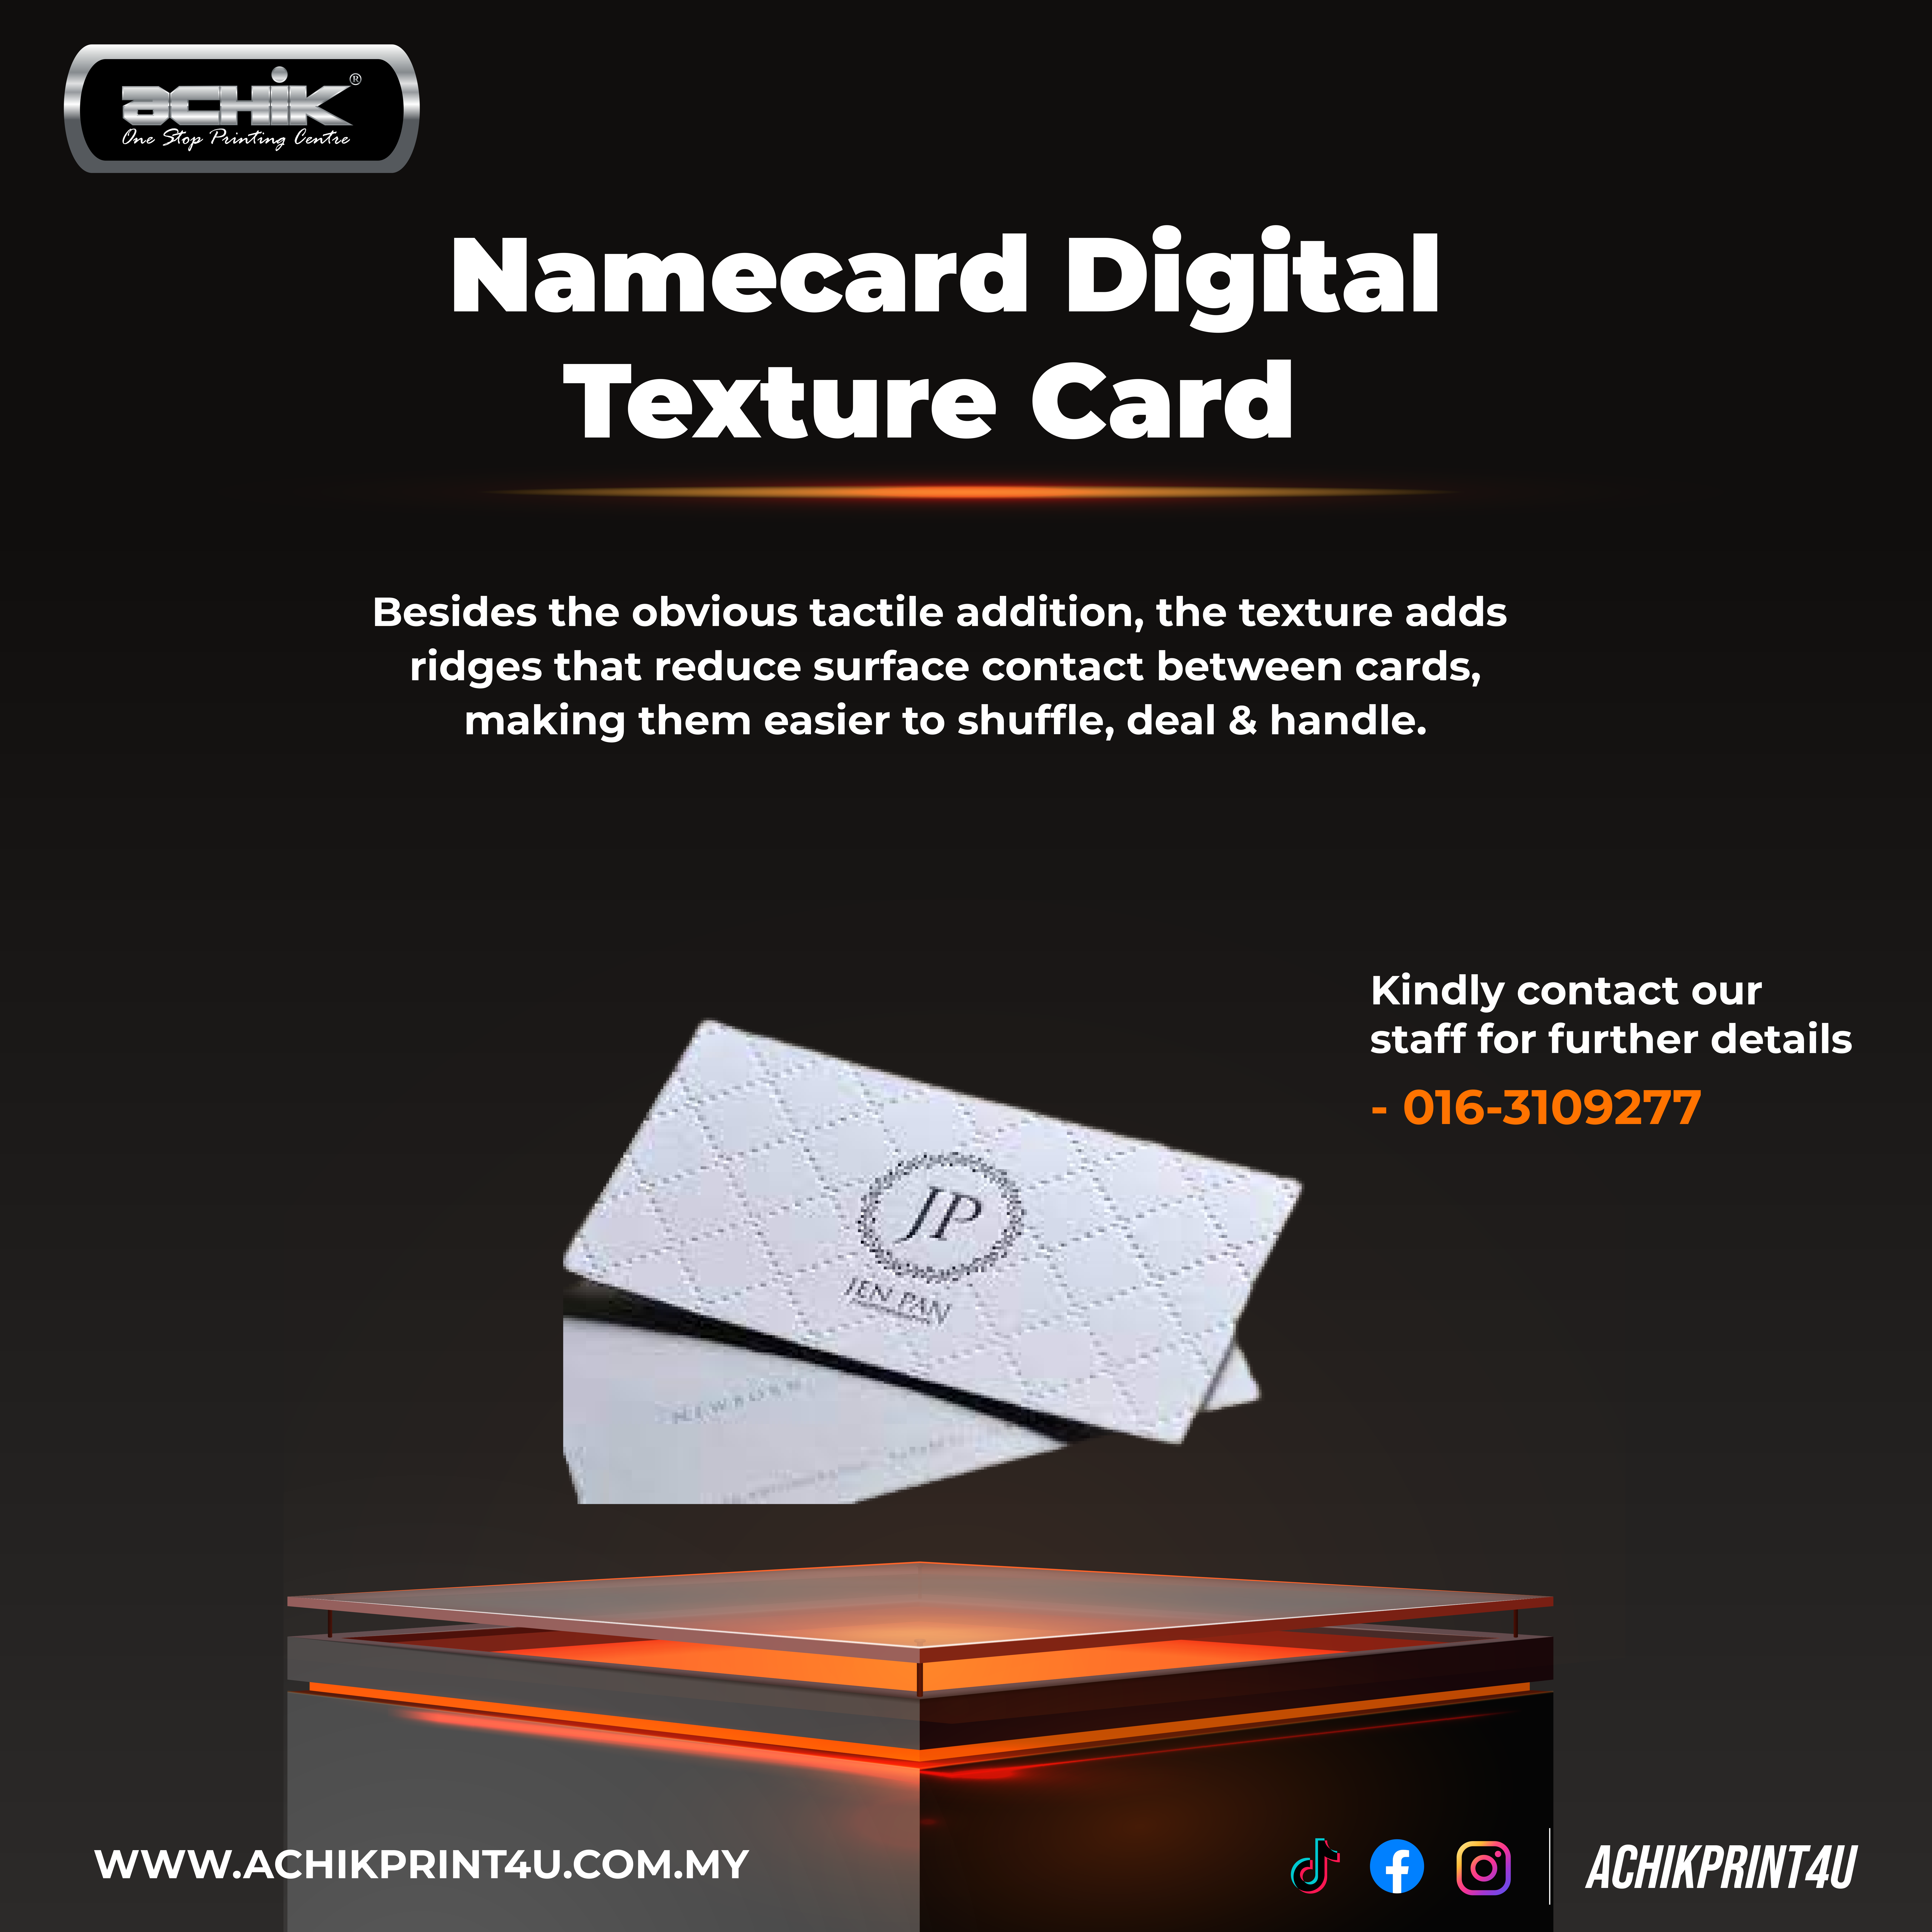 Namecard Digital - Texture Card